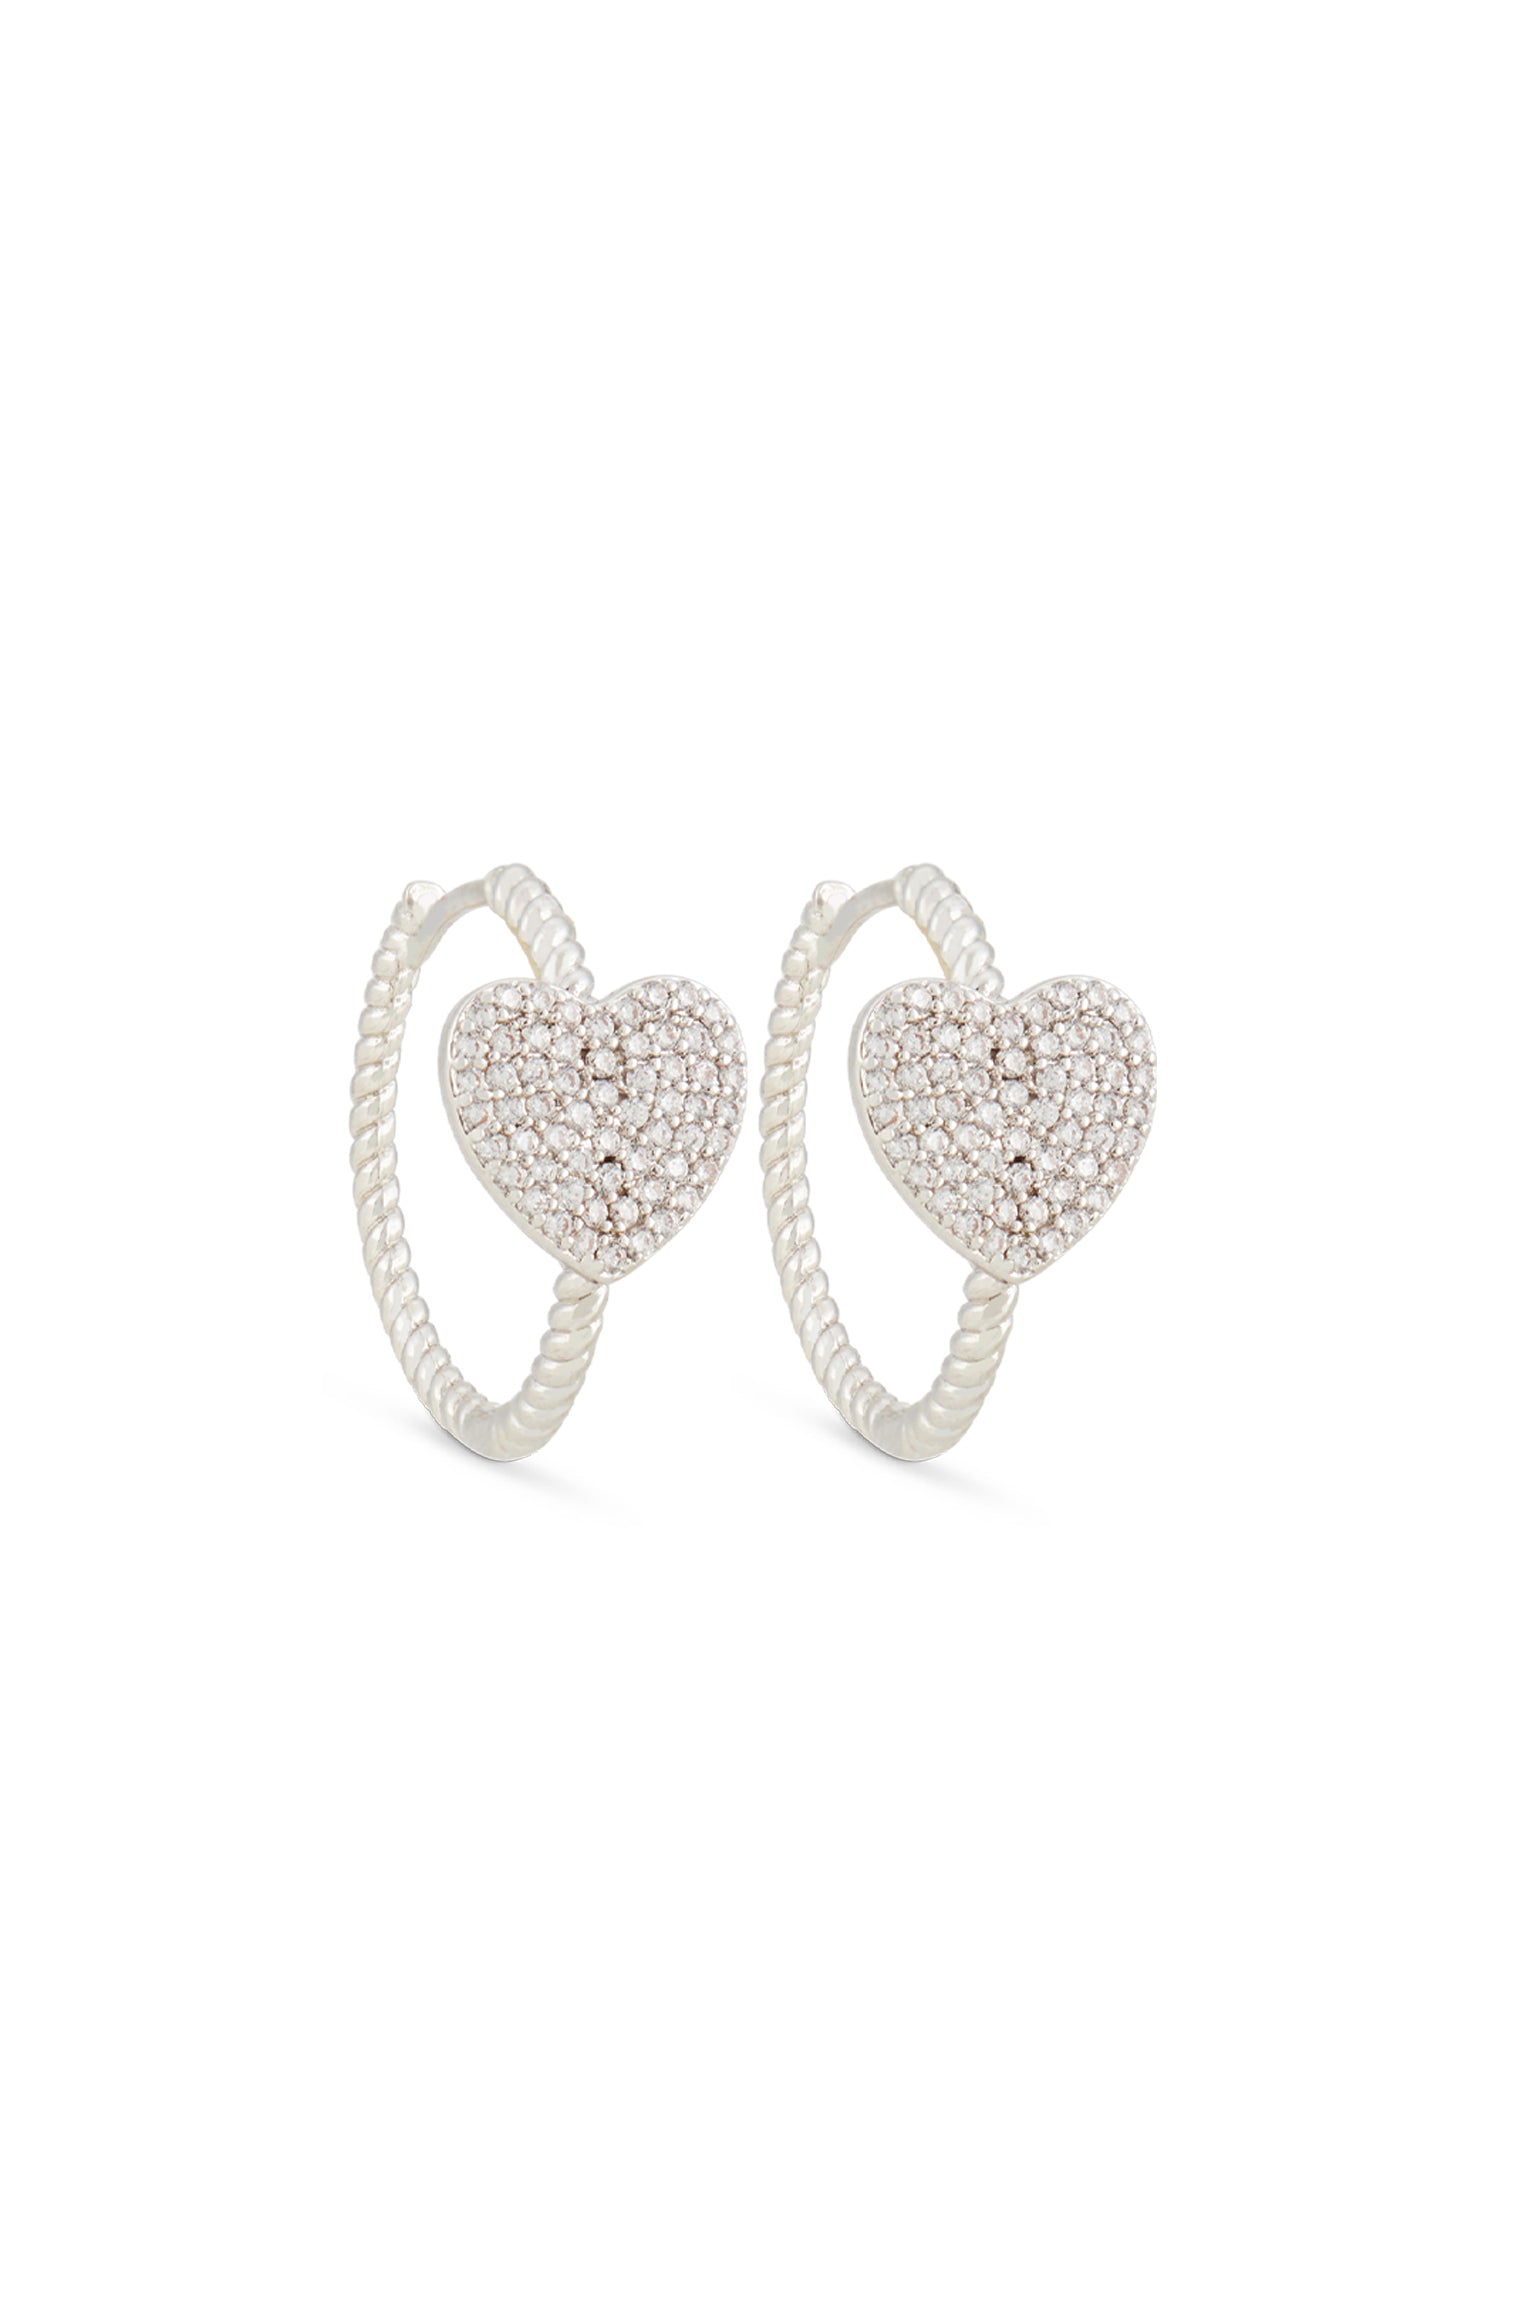 MELUSINA BIJOUX Circle Earrings with Rhodium Heart